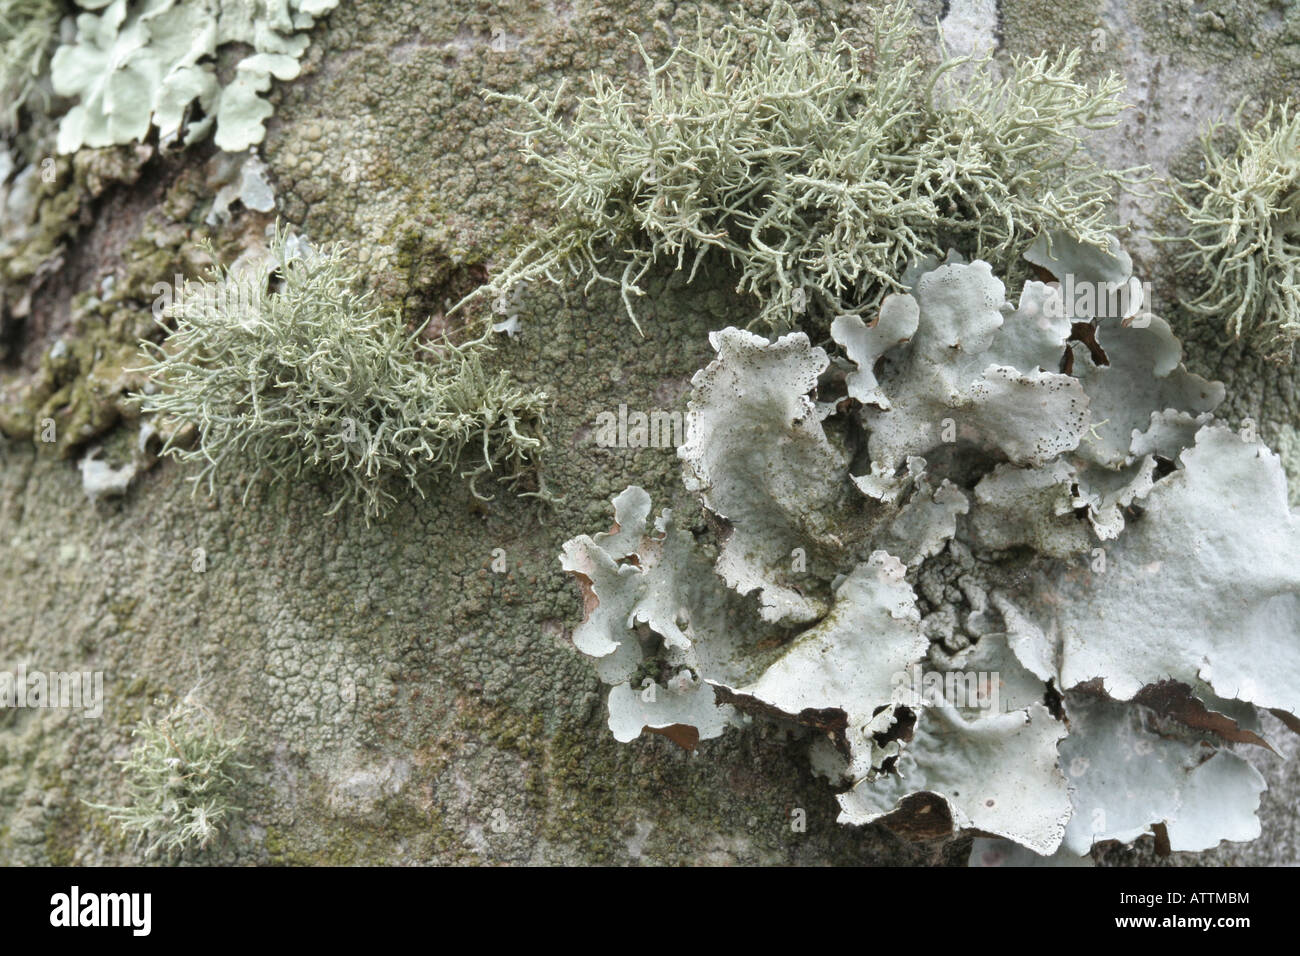 Fruticose (Cladonia sp.), foliose (Parmotrema sp.), and crustose (unidentified) lichens. Stock Photo